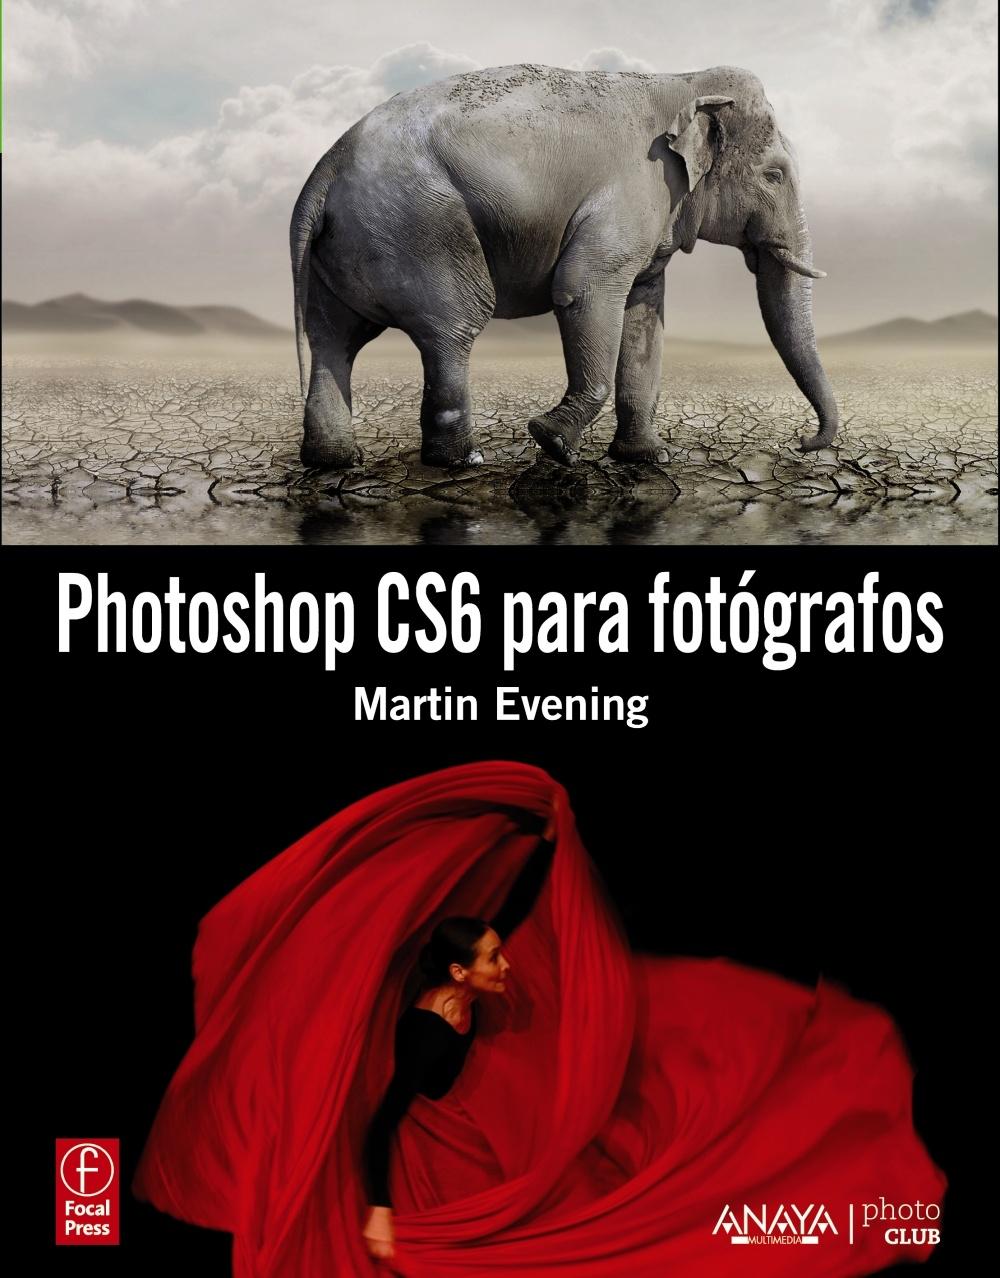 PHOTOSHOP CS6 PARA FOTOGRAFOS. 